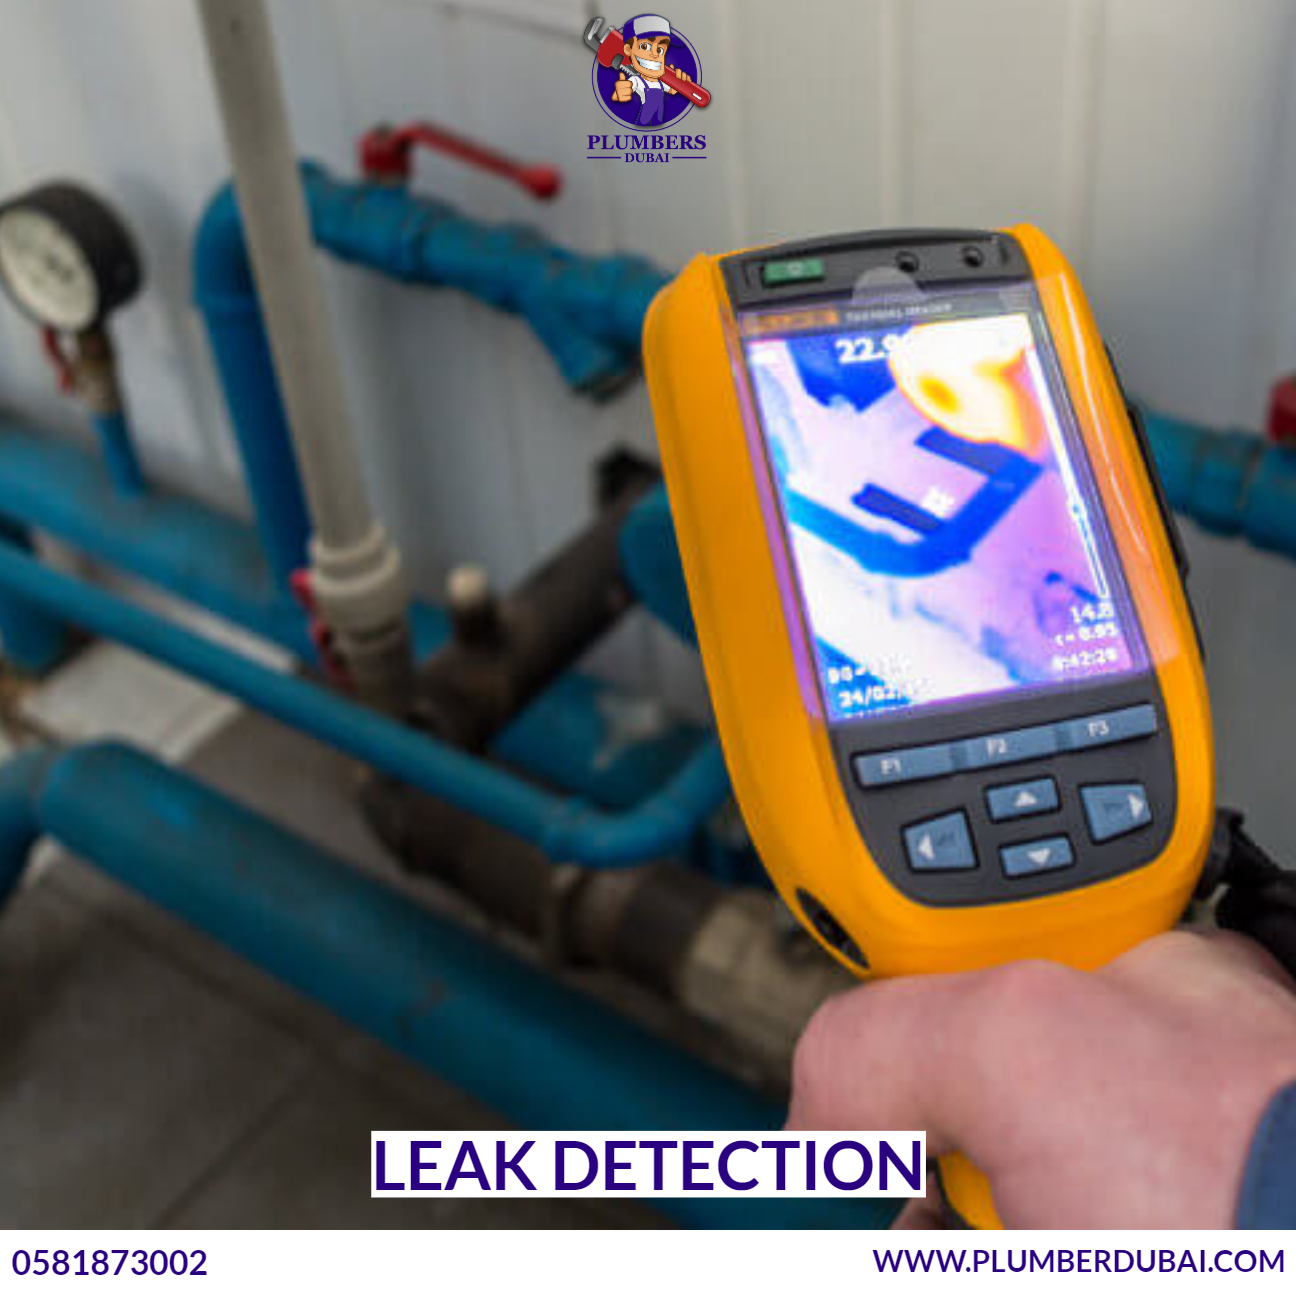 Leak detection